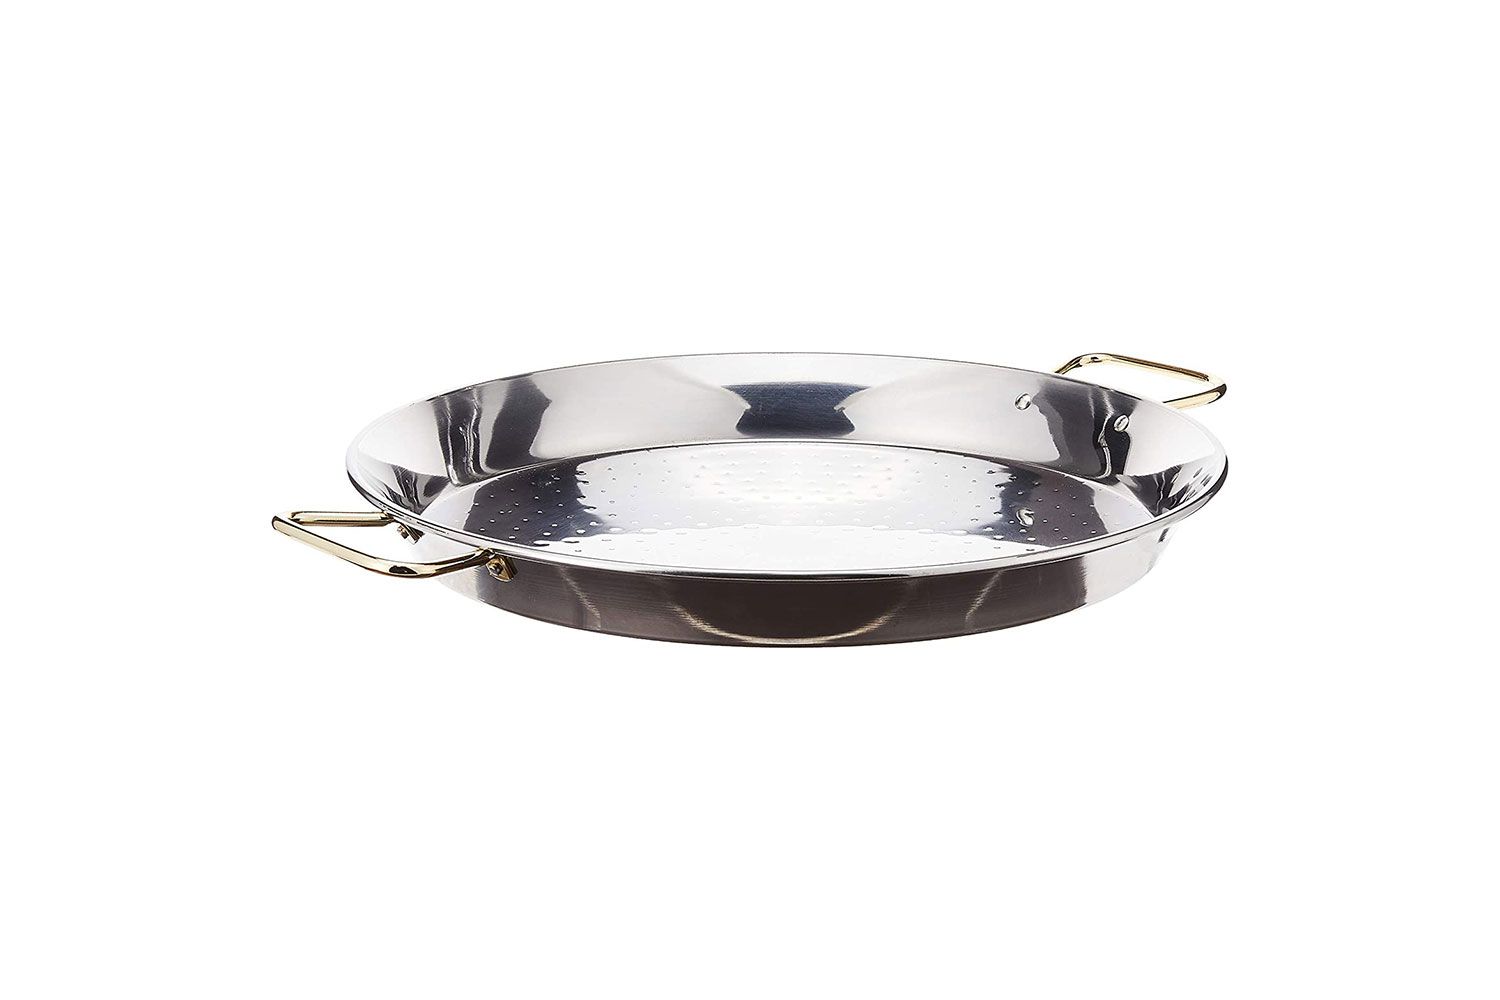 Garcima-16-inch-stainless-steel-paella-pan